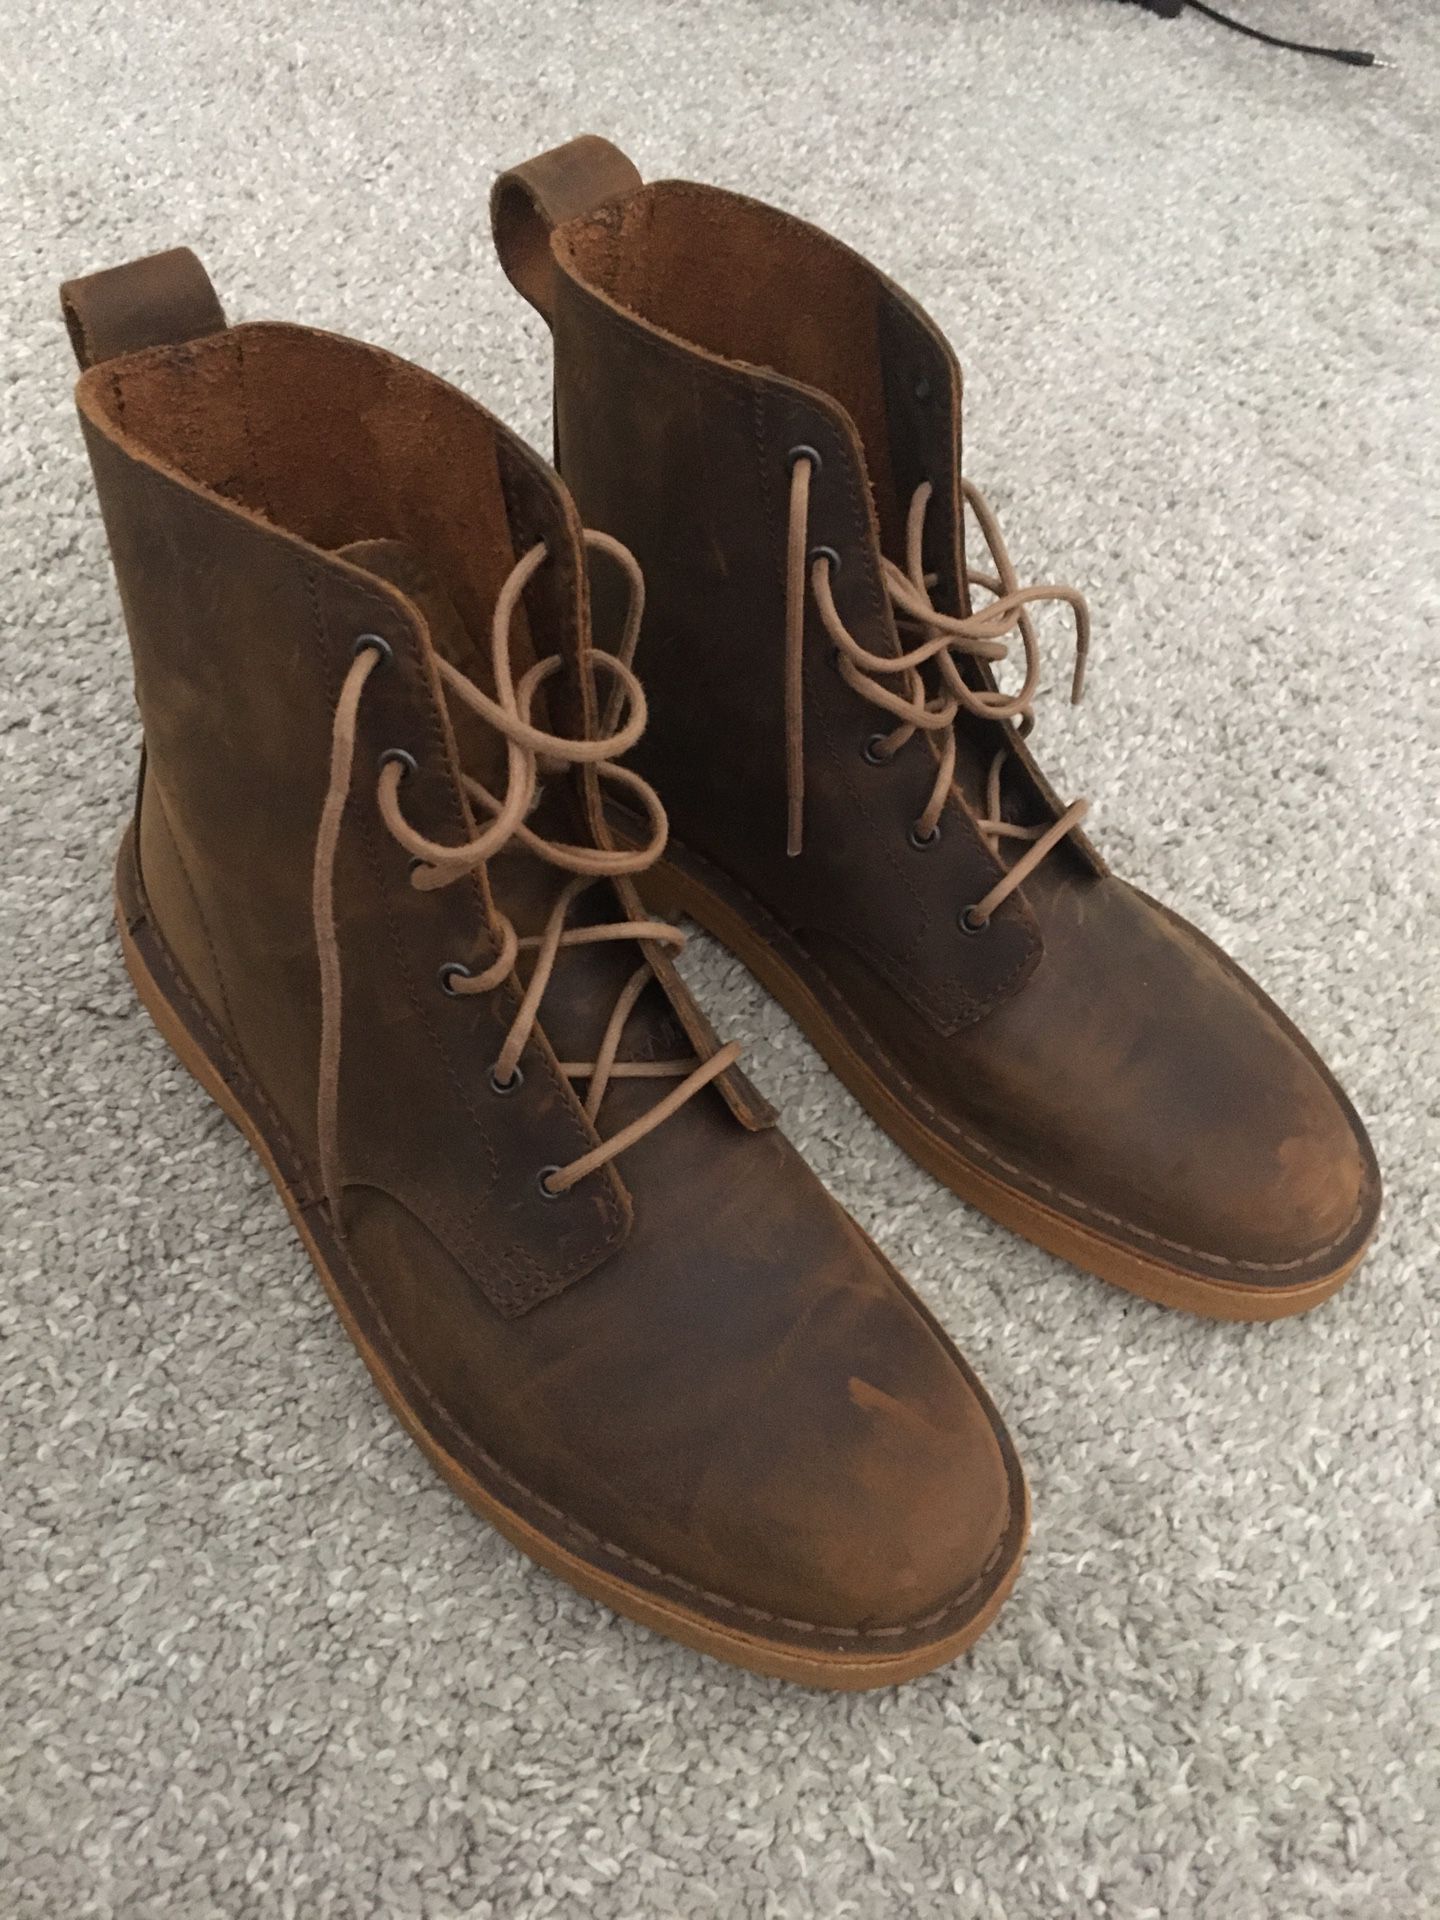 NEW Clark’s Original Desert Mali boots Men’s 7